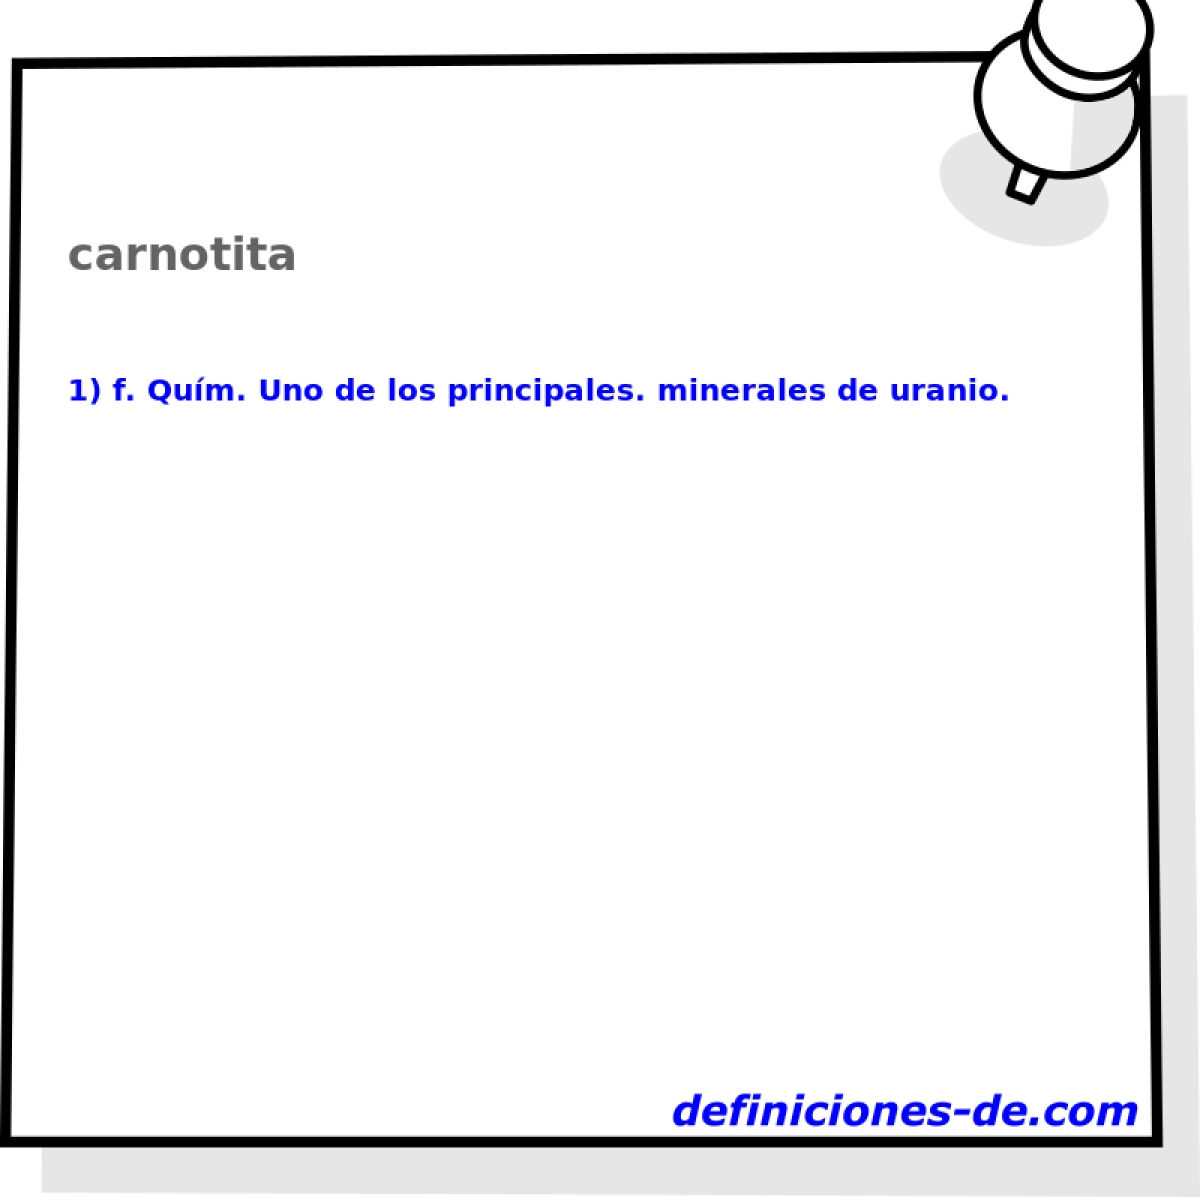 carnotita 